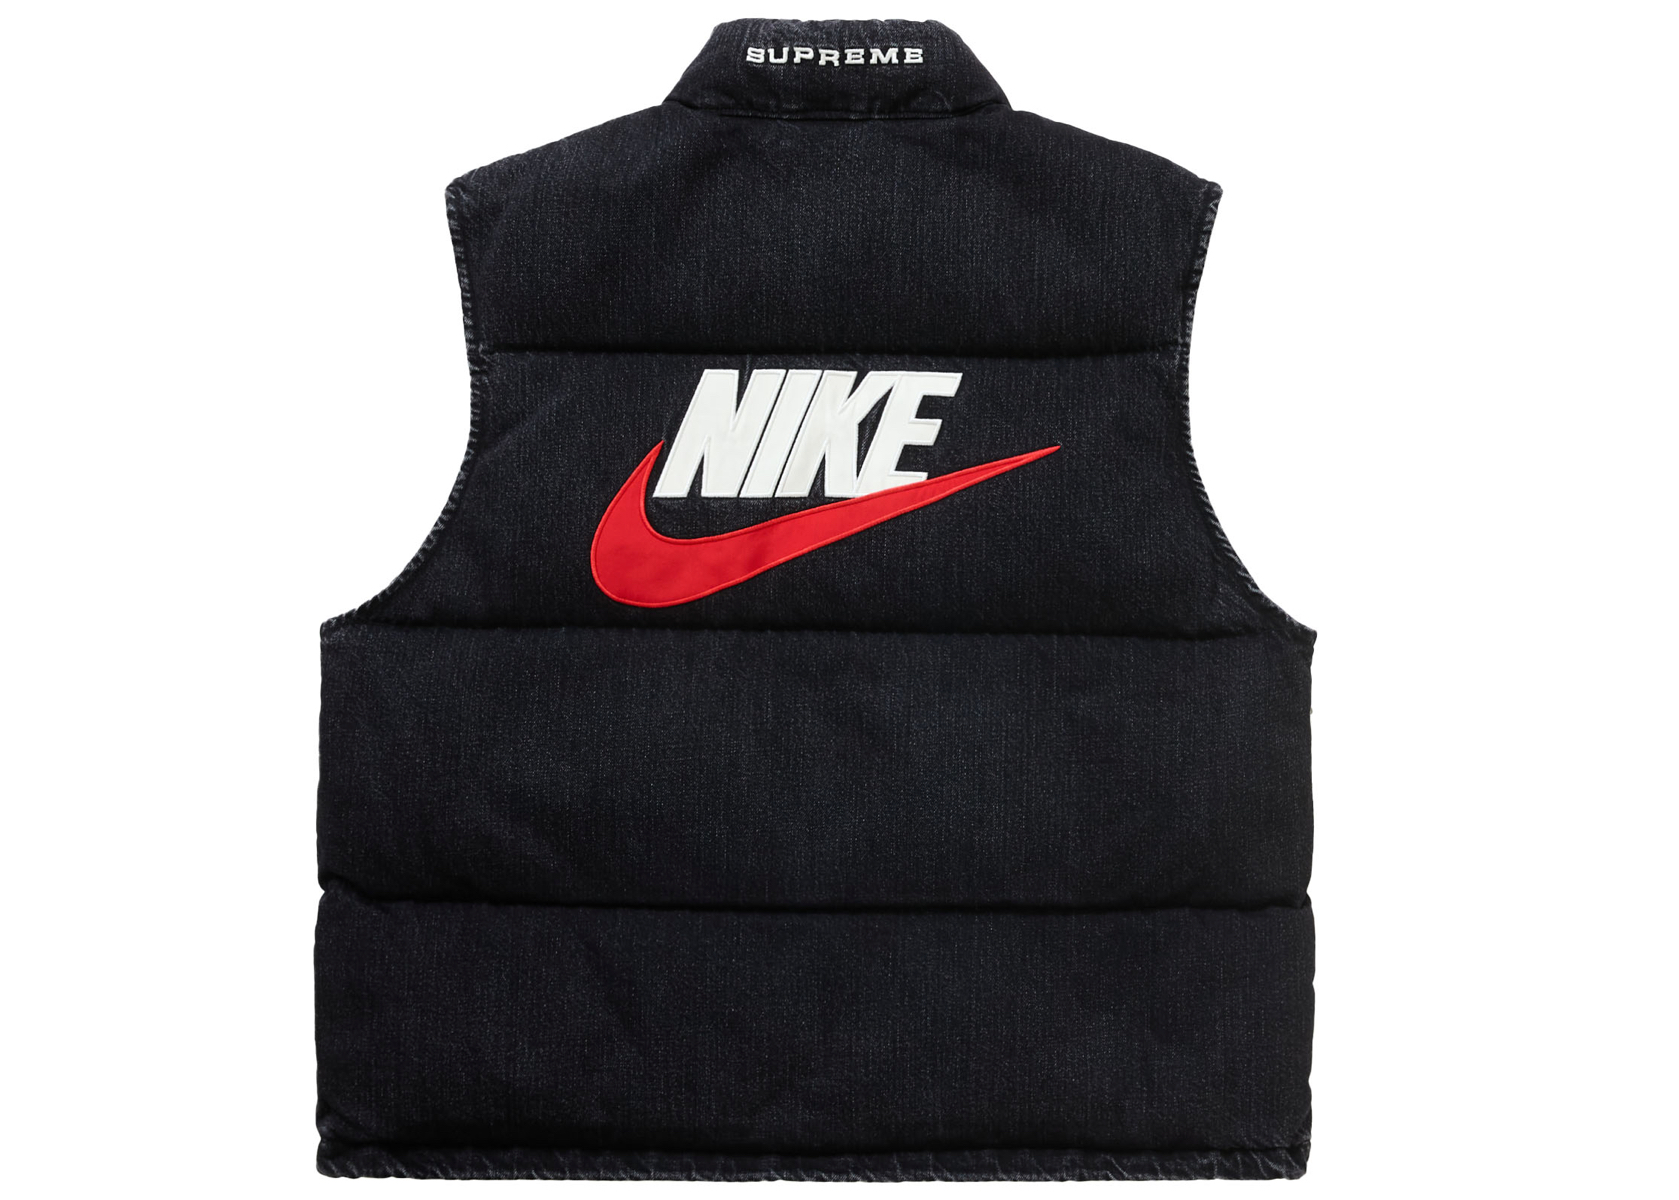 Supreme/Nike Denim Puffer Vestそのまま発送させていただきます